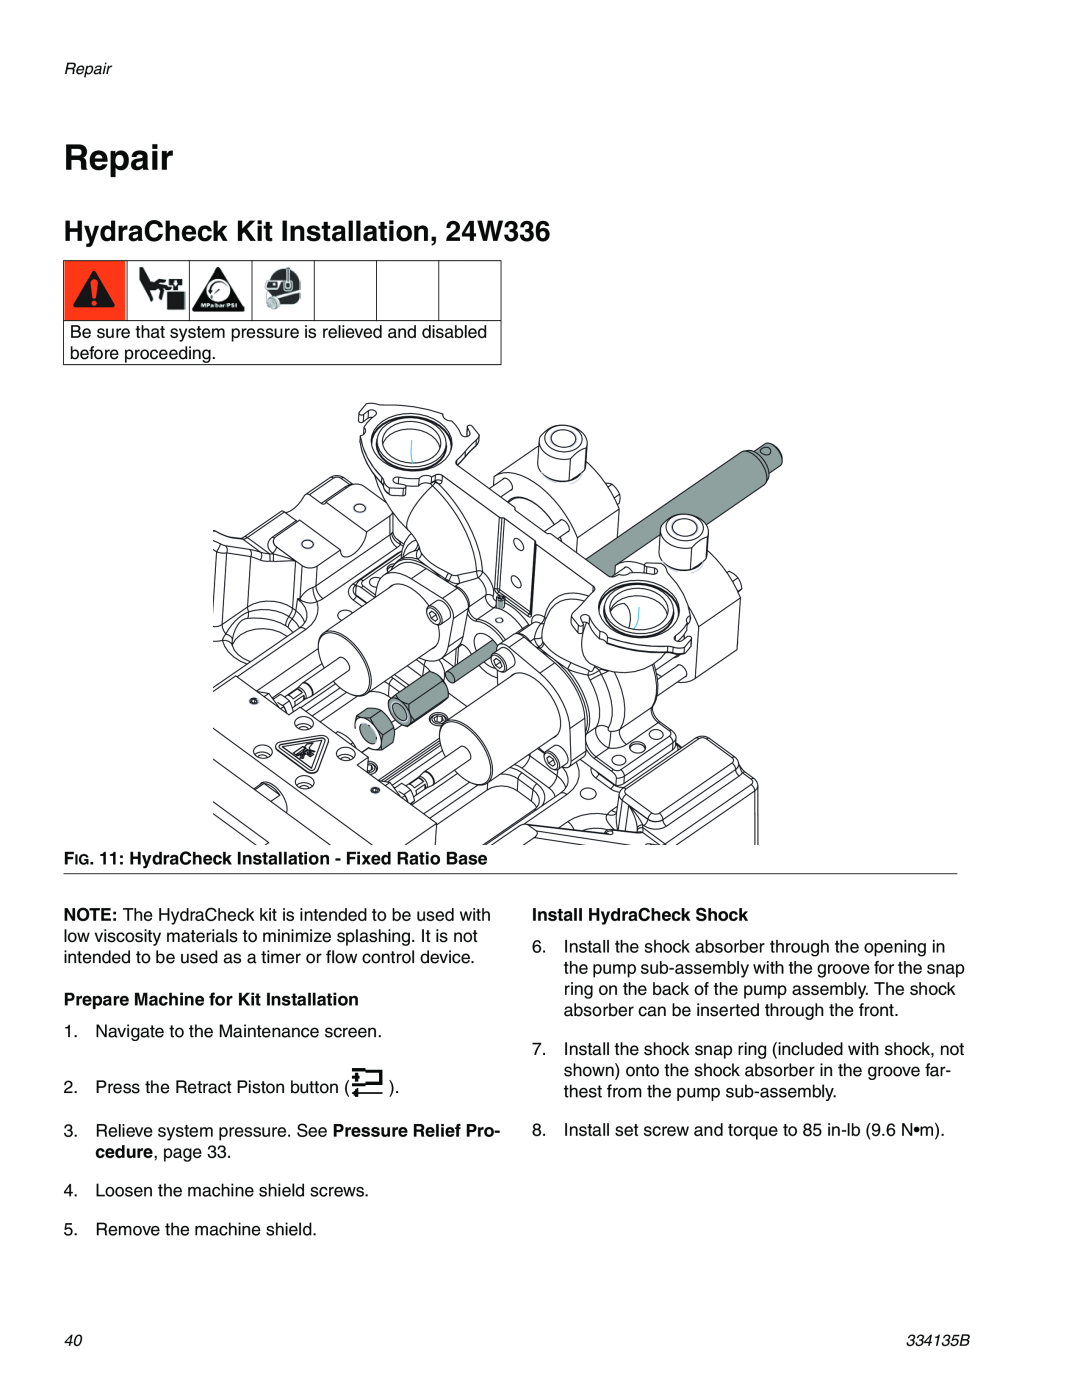 Graco 334135B Repair, HydraCheck Kit Installation, 24W336, HydraCheck Installation - Fixed Ratio Base 